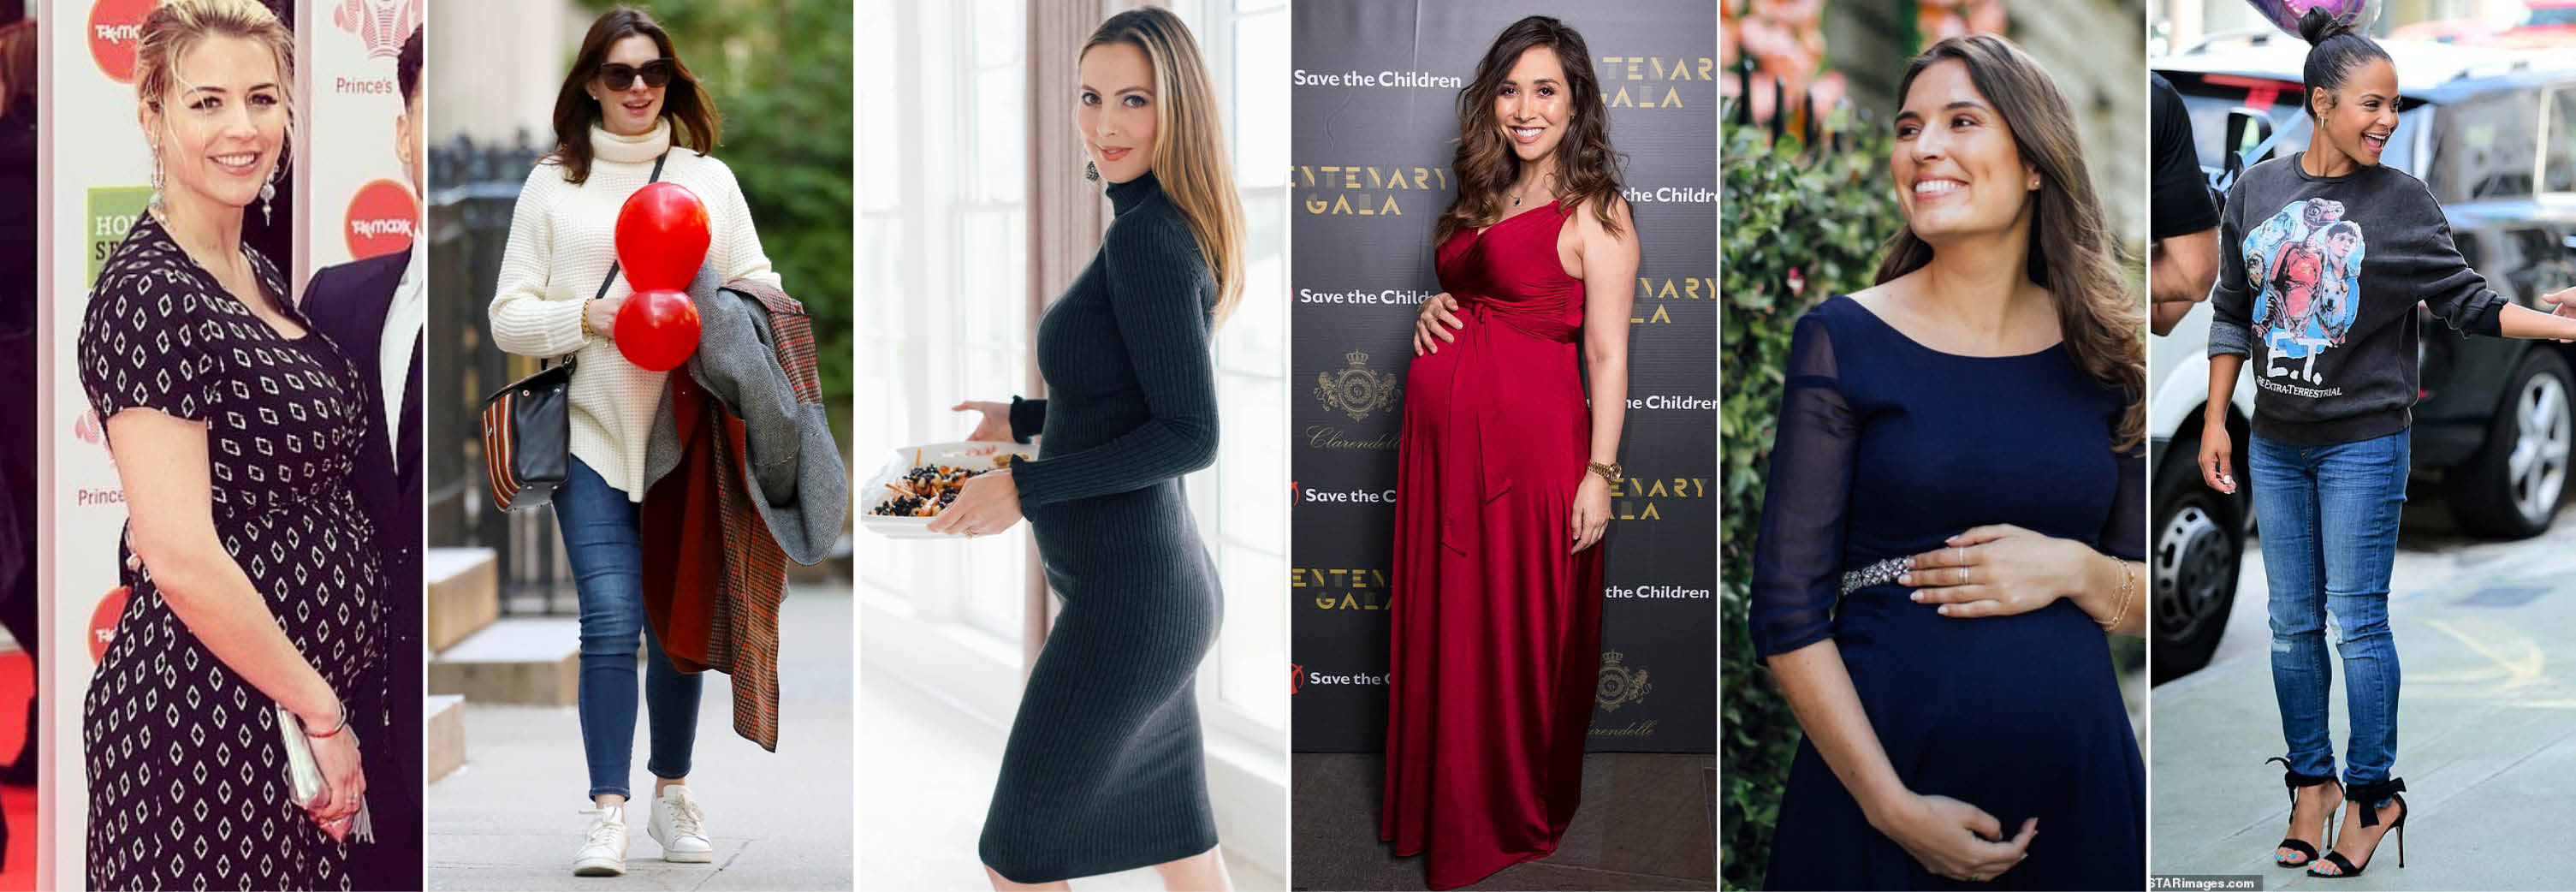 2019 - pregnant celebs wear Seraphine